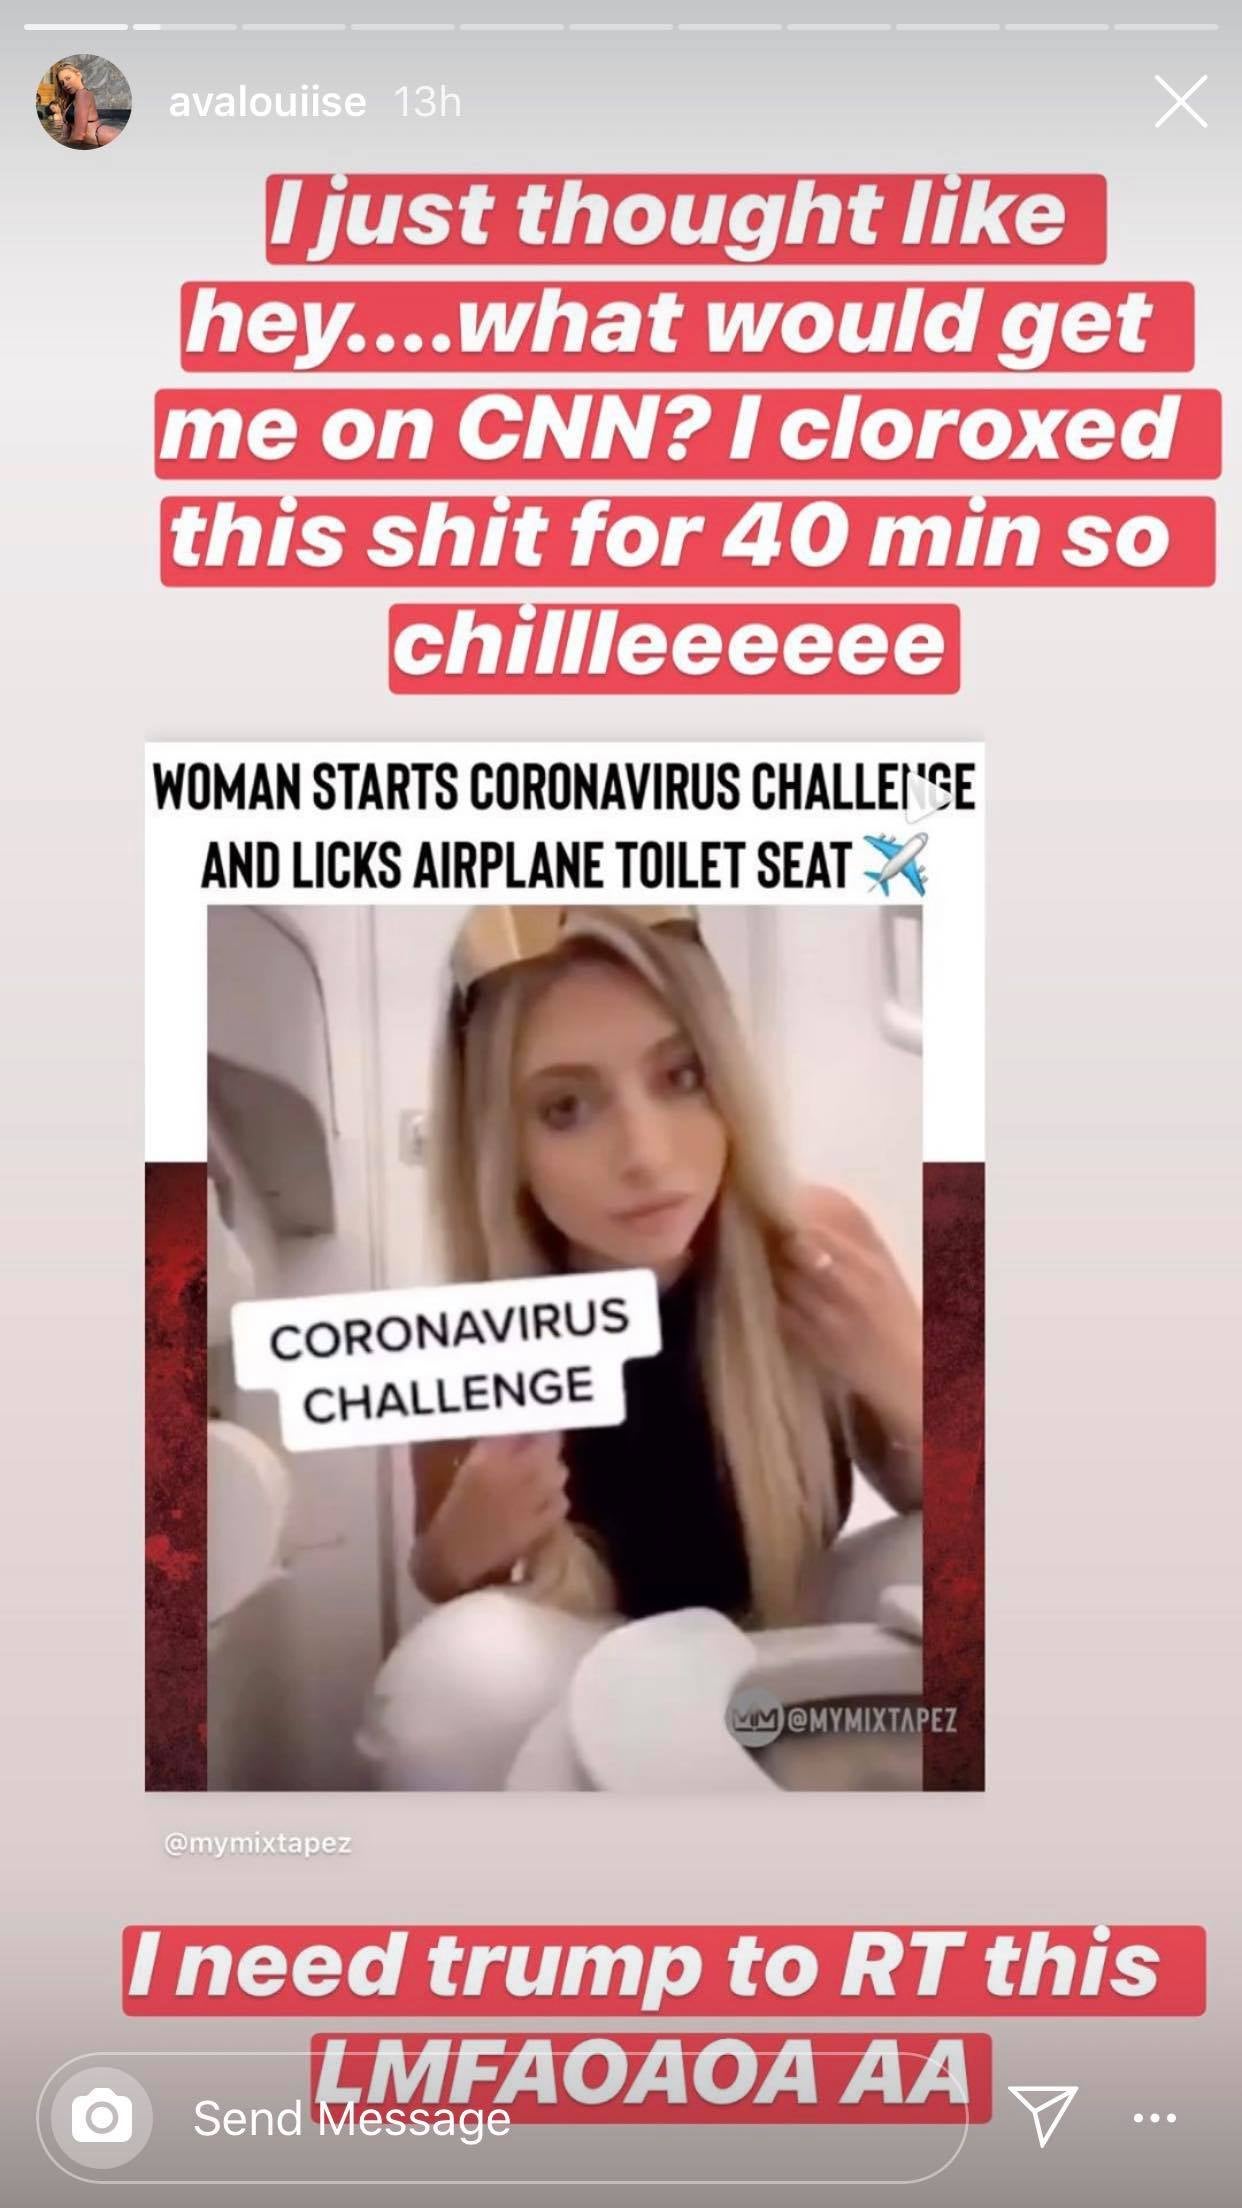 Tik Tok User Goes Viral After Starting "Coronavirus Challenge" By Licking Airplane Toilet Seat - WORLD OF BUZZ 2